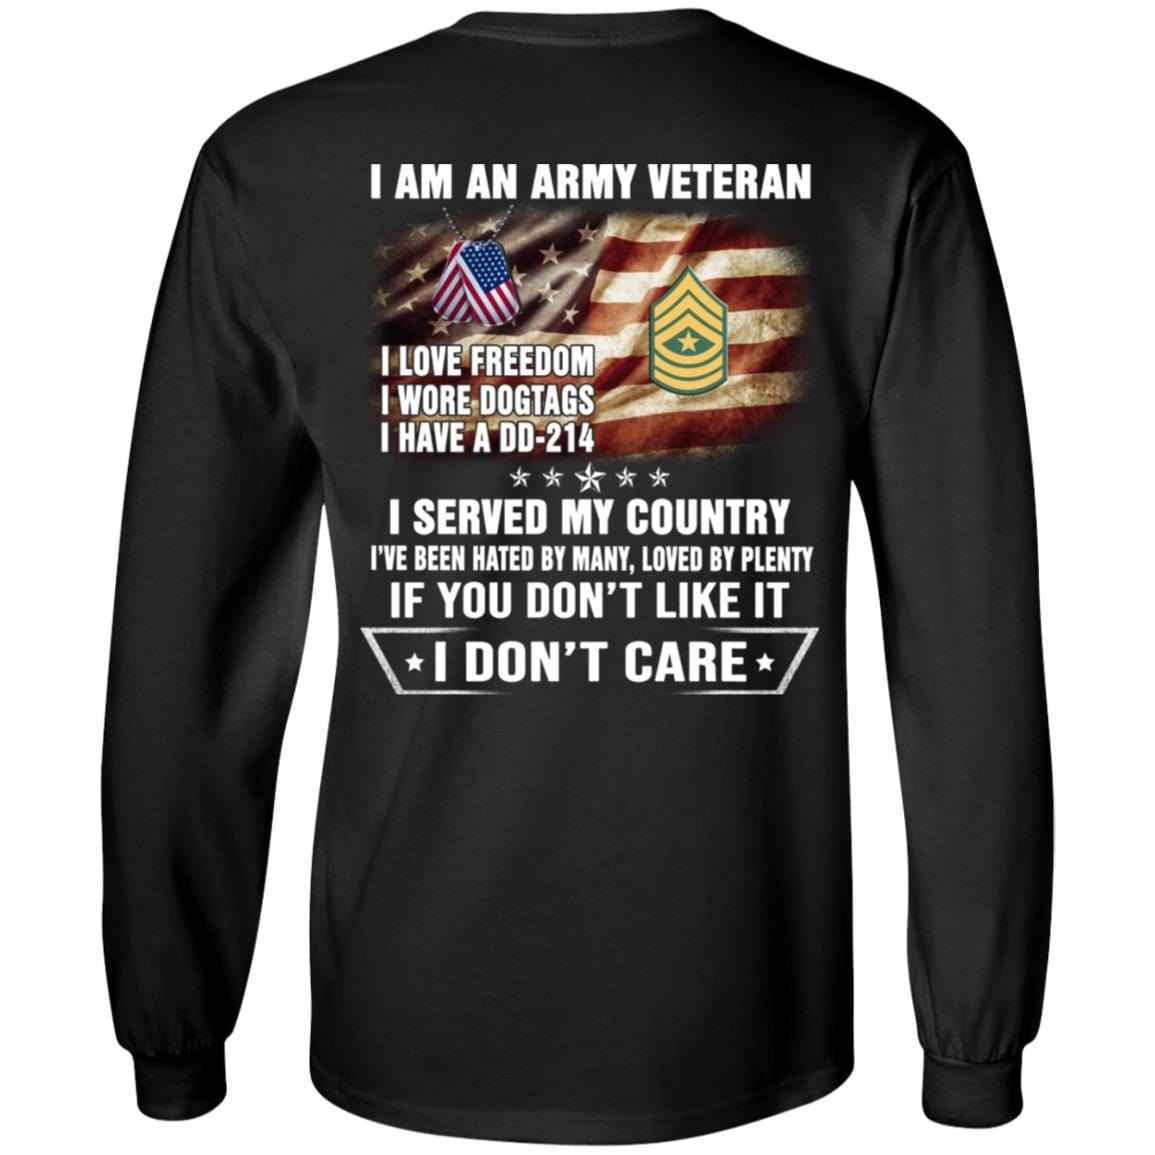 T-Shirt "I Am An Army Veteran" E-9 Sergeant Major(SGM)Rank On Back-TShirt-Army-Veterans Nation